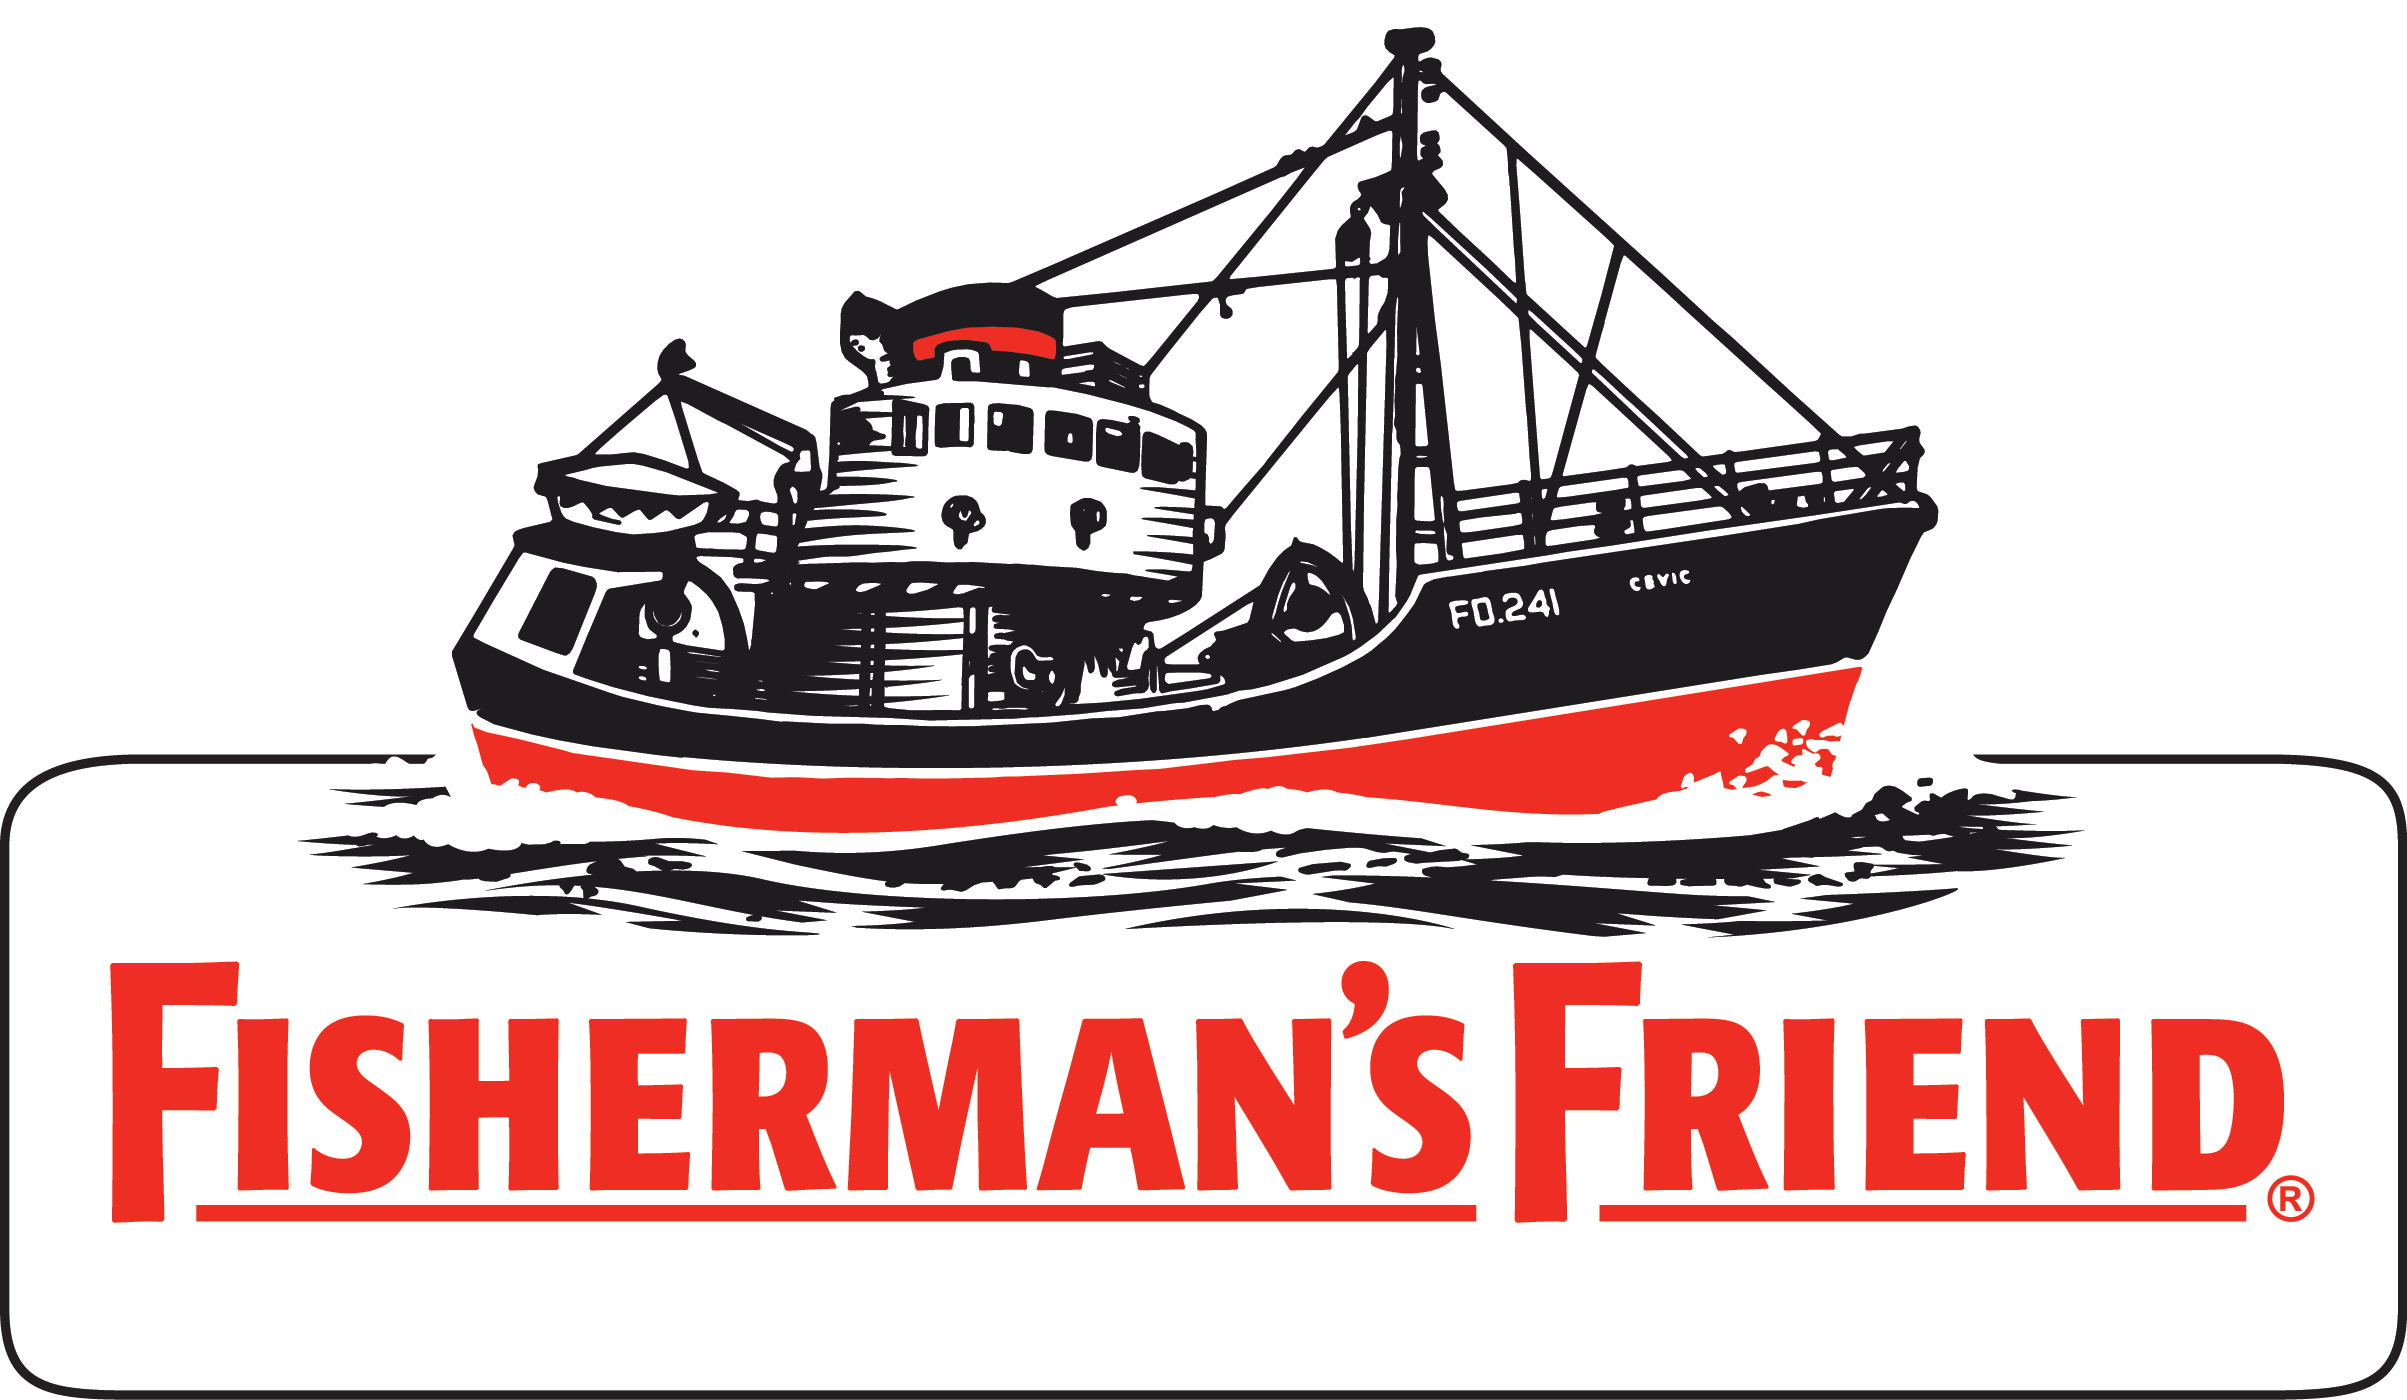 Fisherman's Friend Logo - Fishermans Friend Logo Png (2407x1400), Png Download